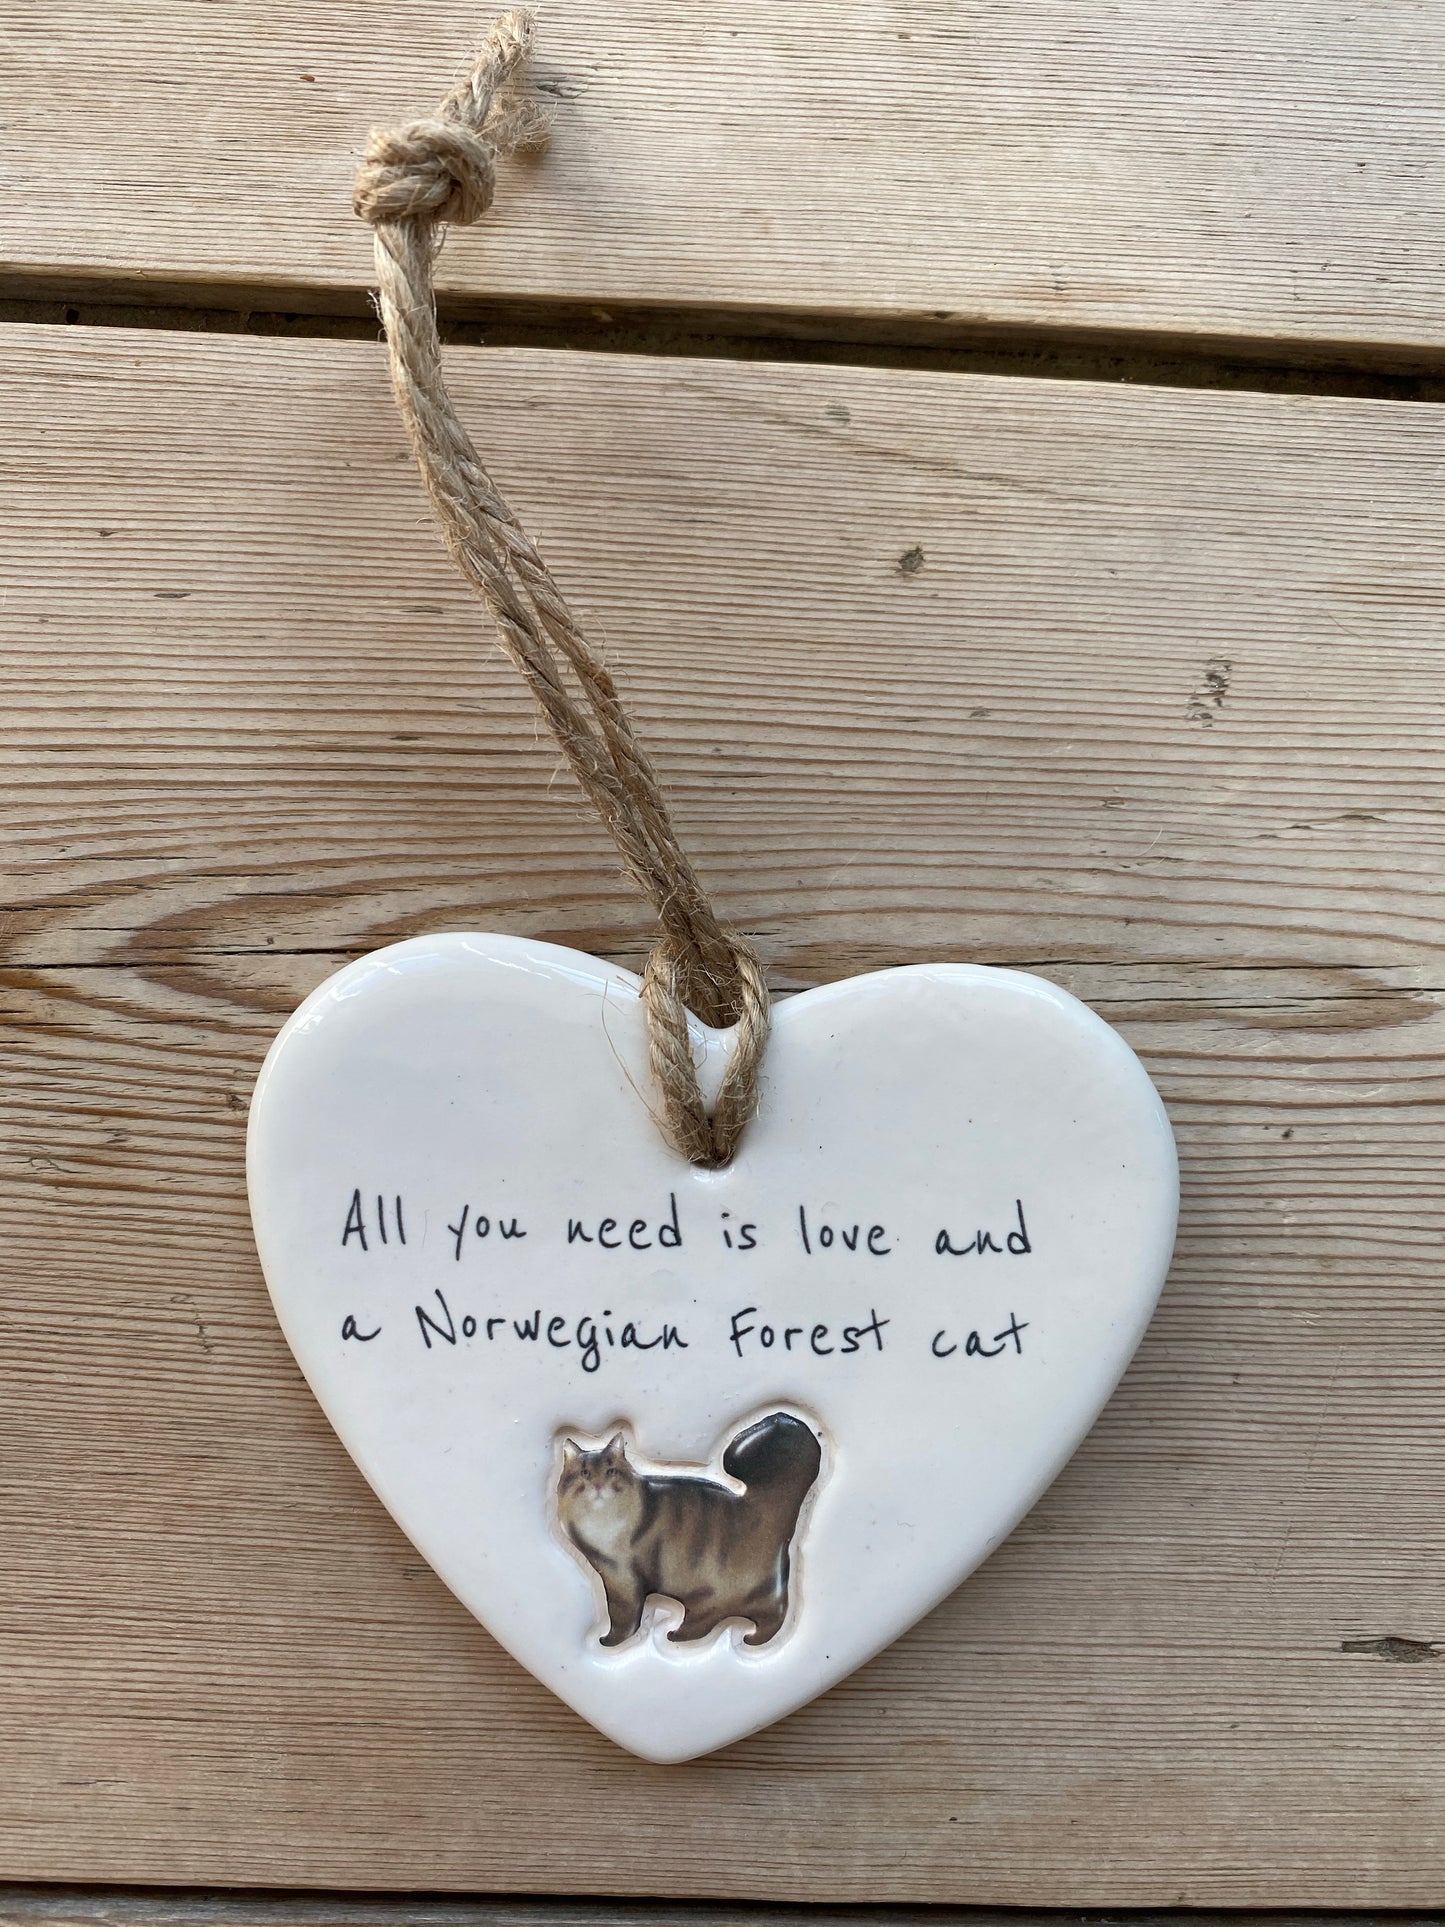 Norwegian Forest cat heart